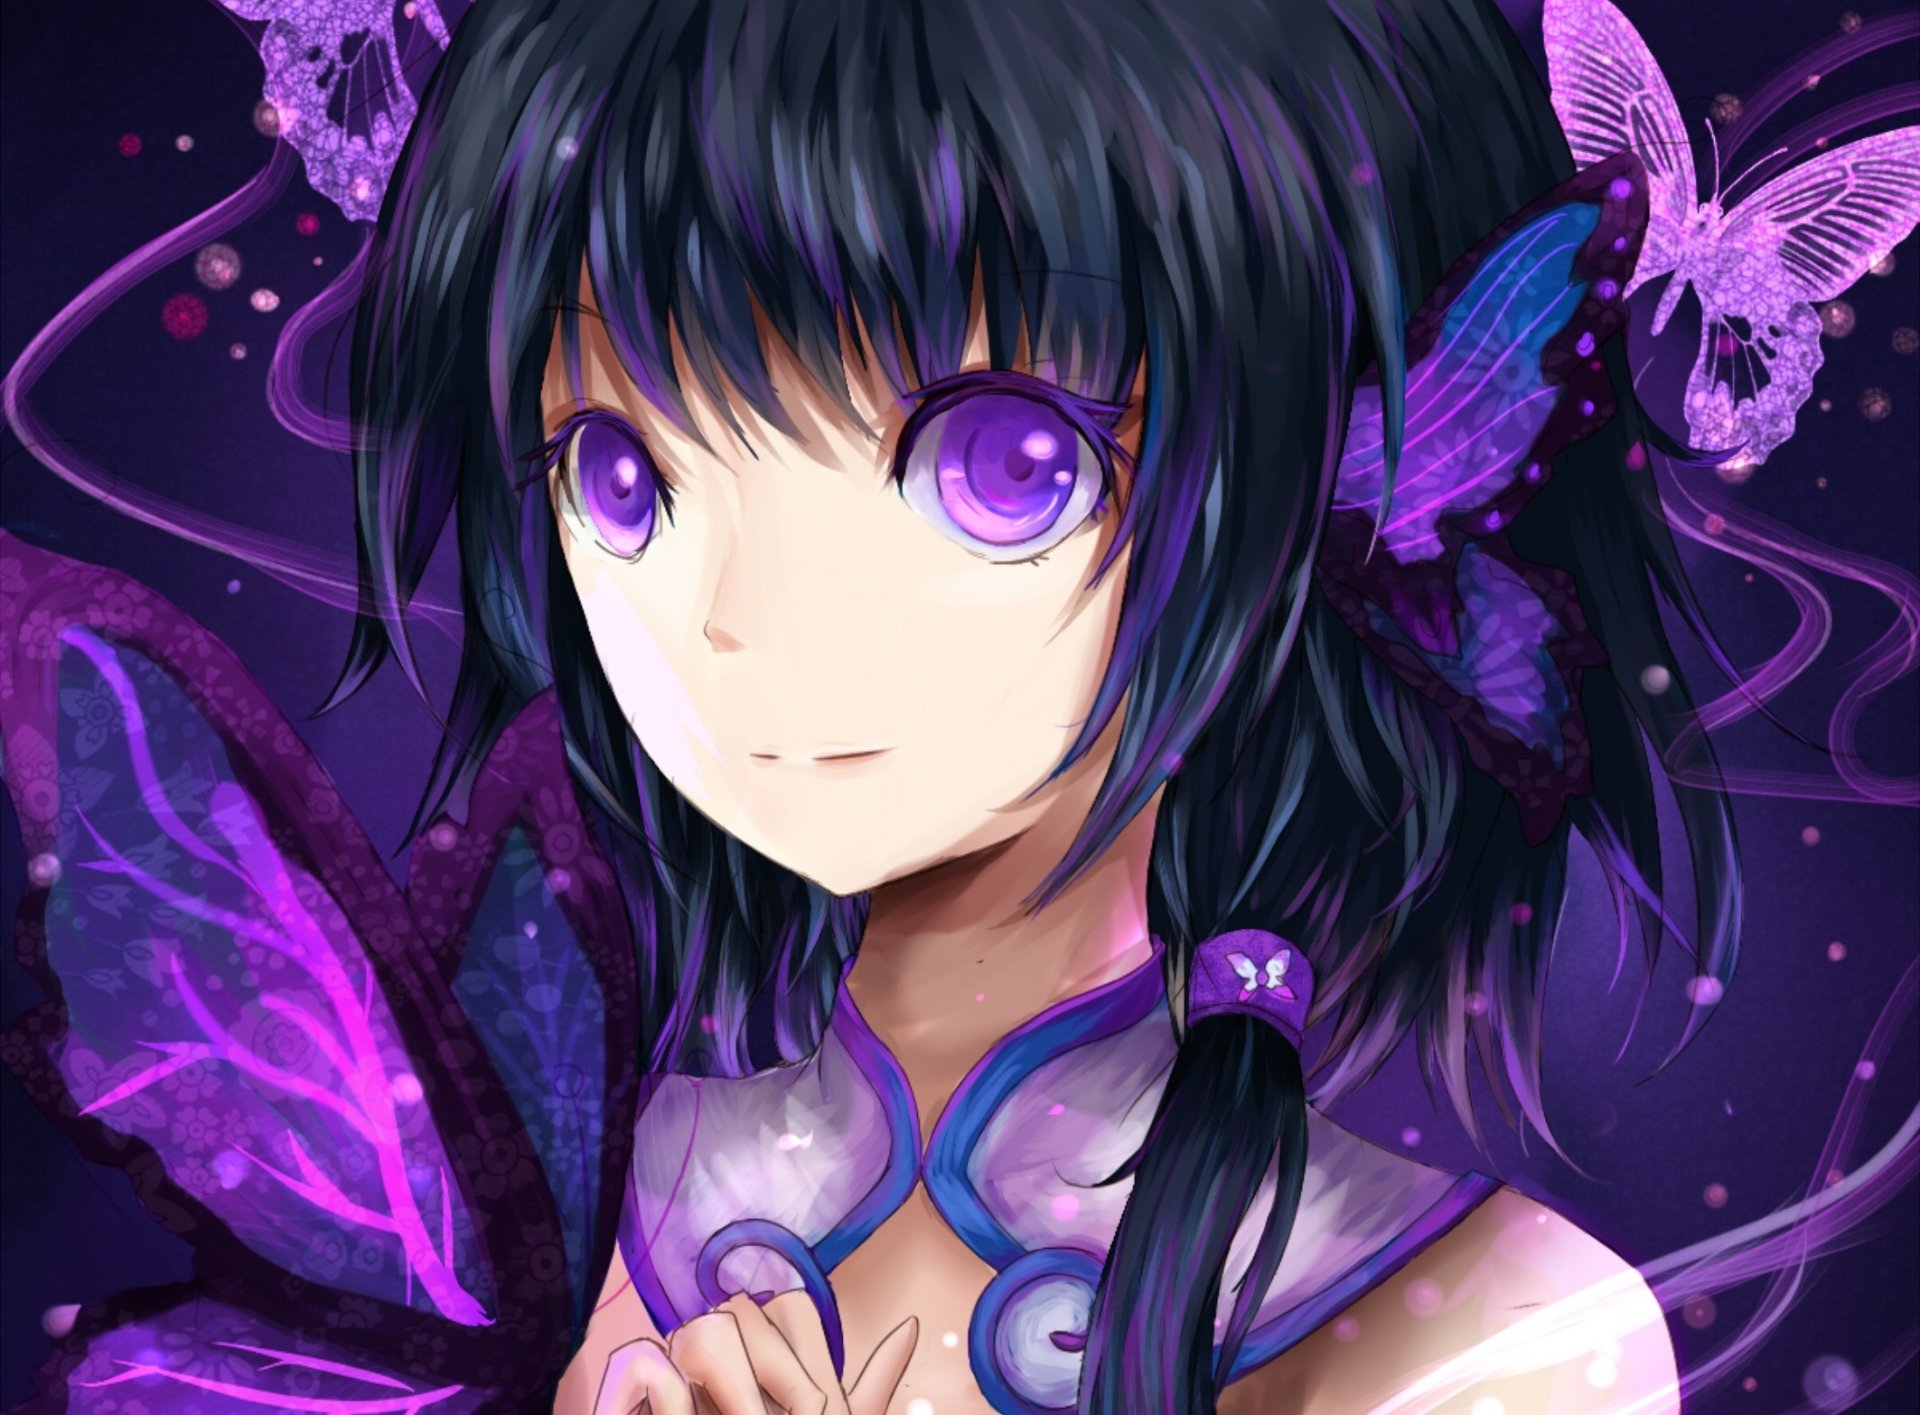 Purple Eyed Anime Girl with Butterflies Around Her Head